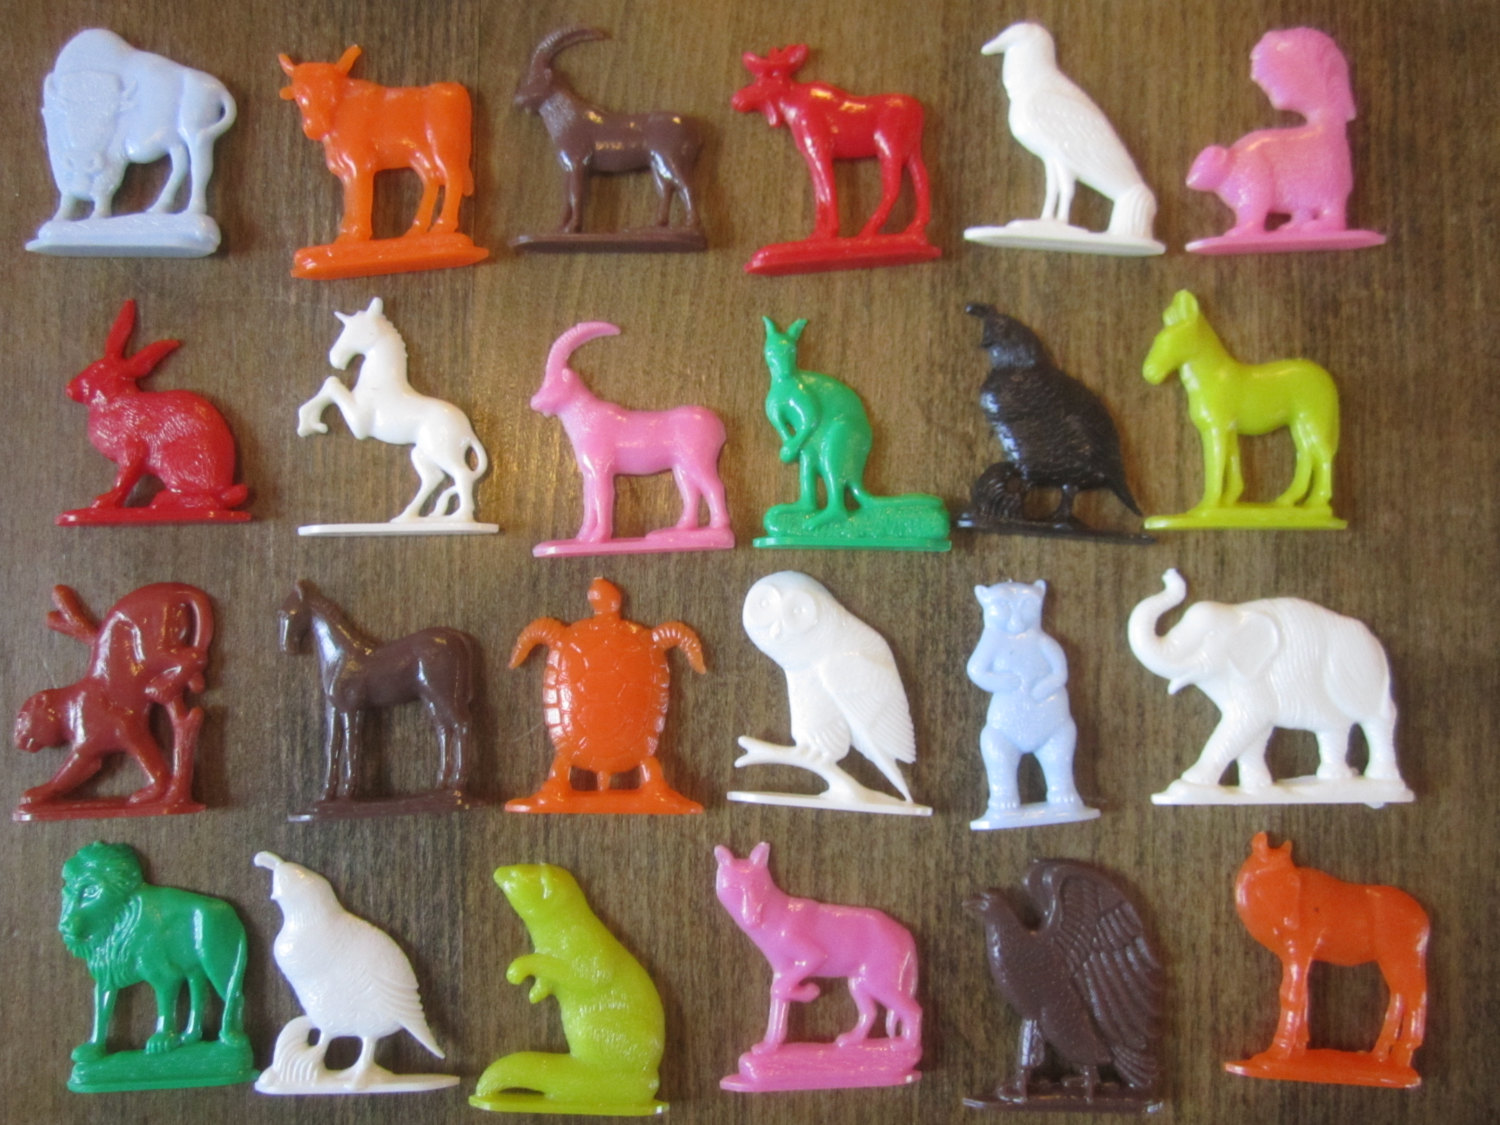 Cracker Jack Prizes Plastic Animals 1960s